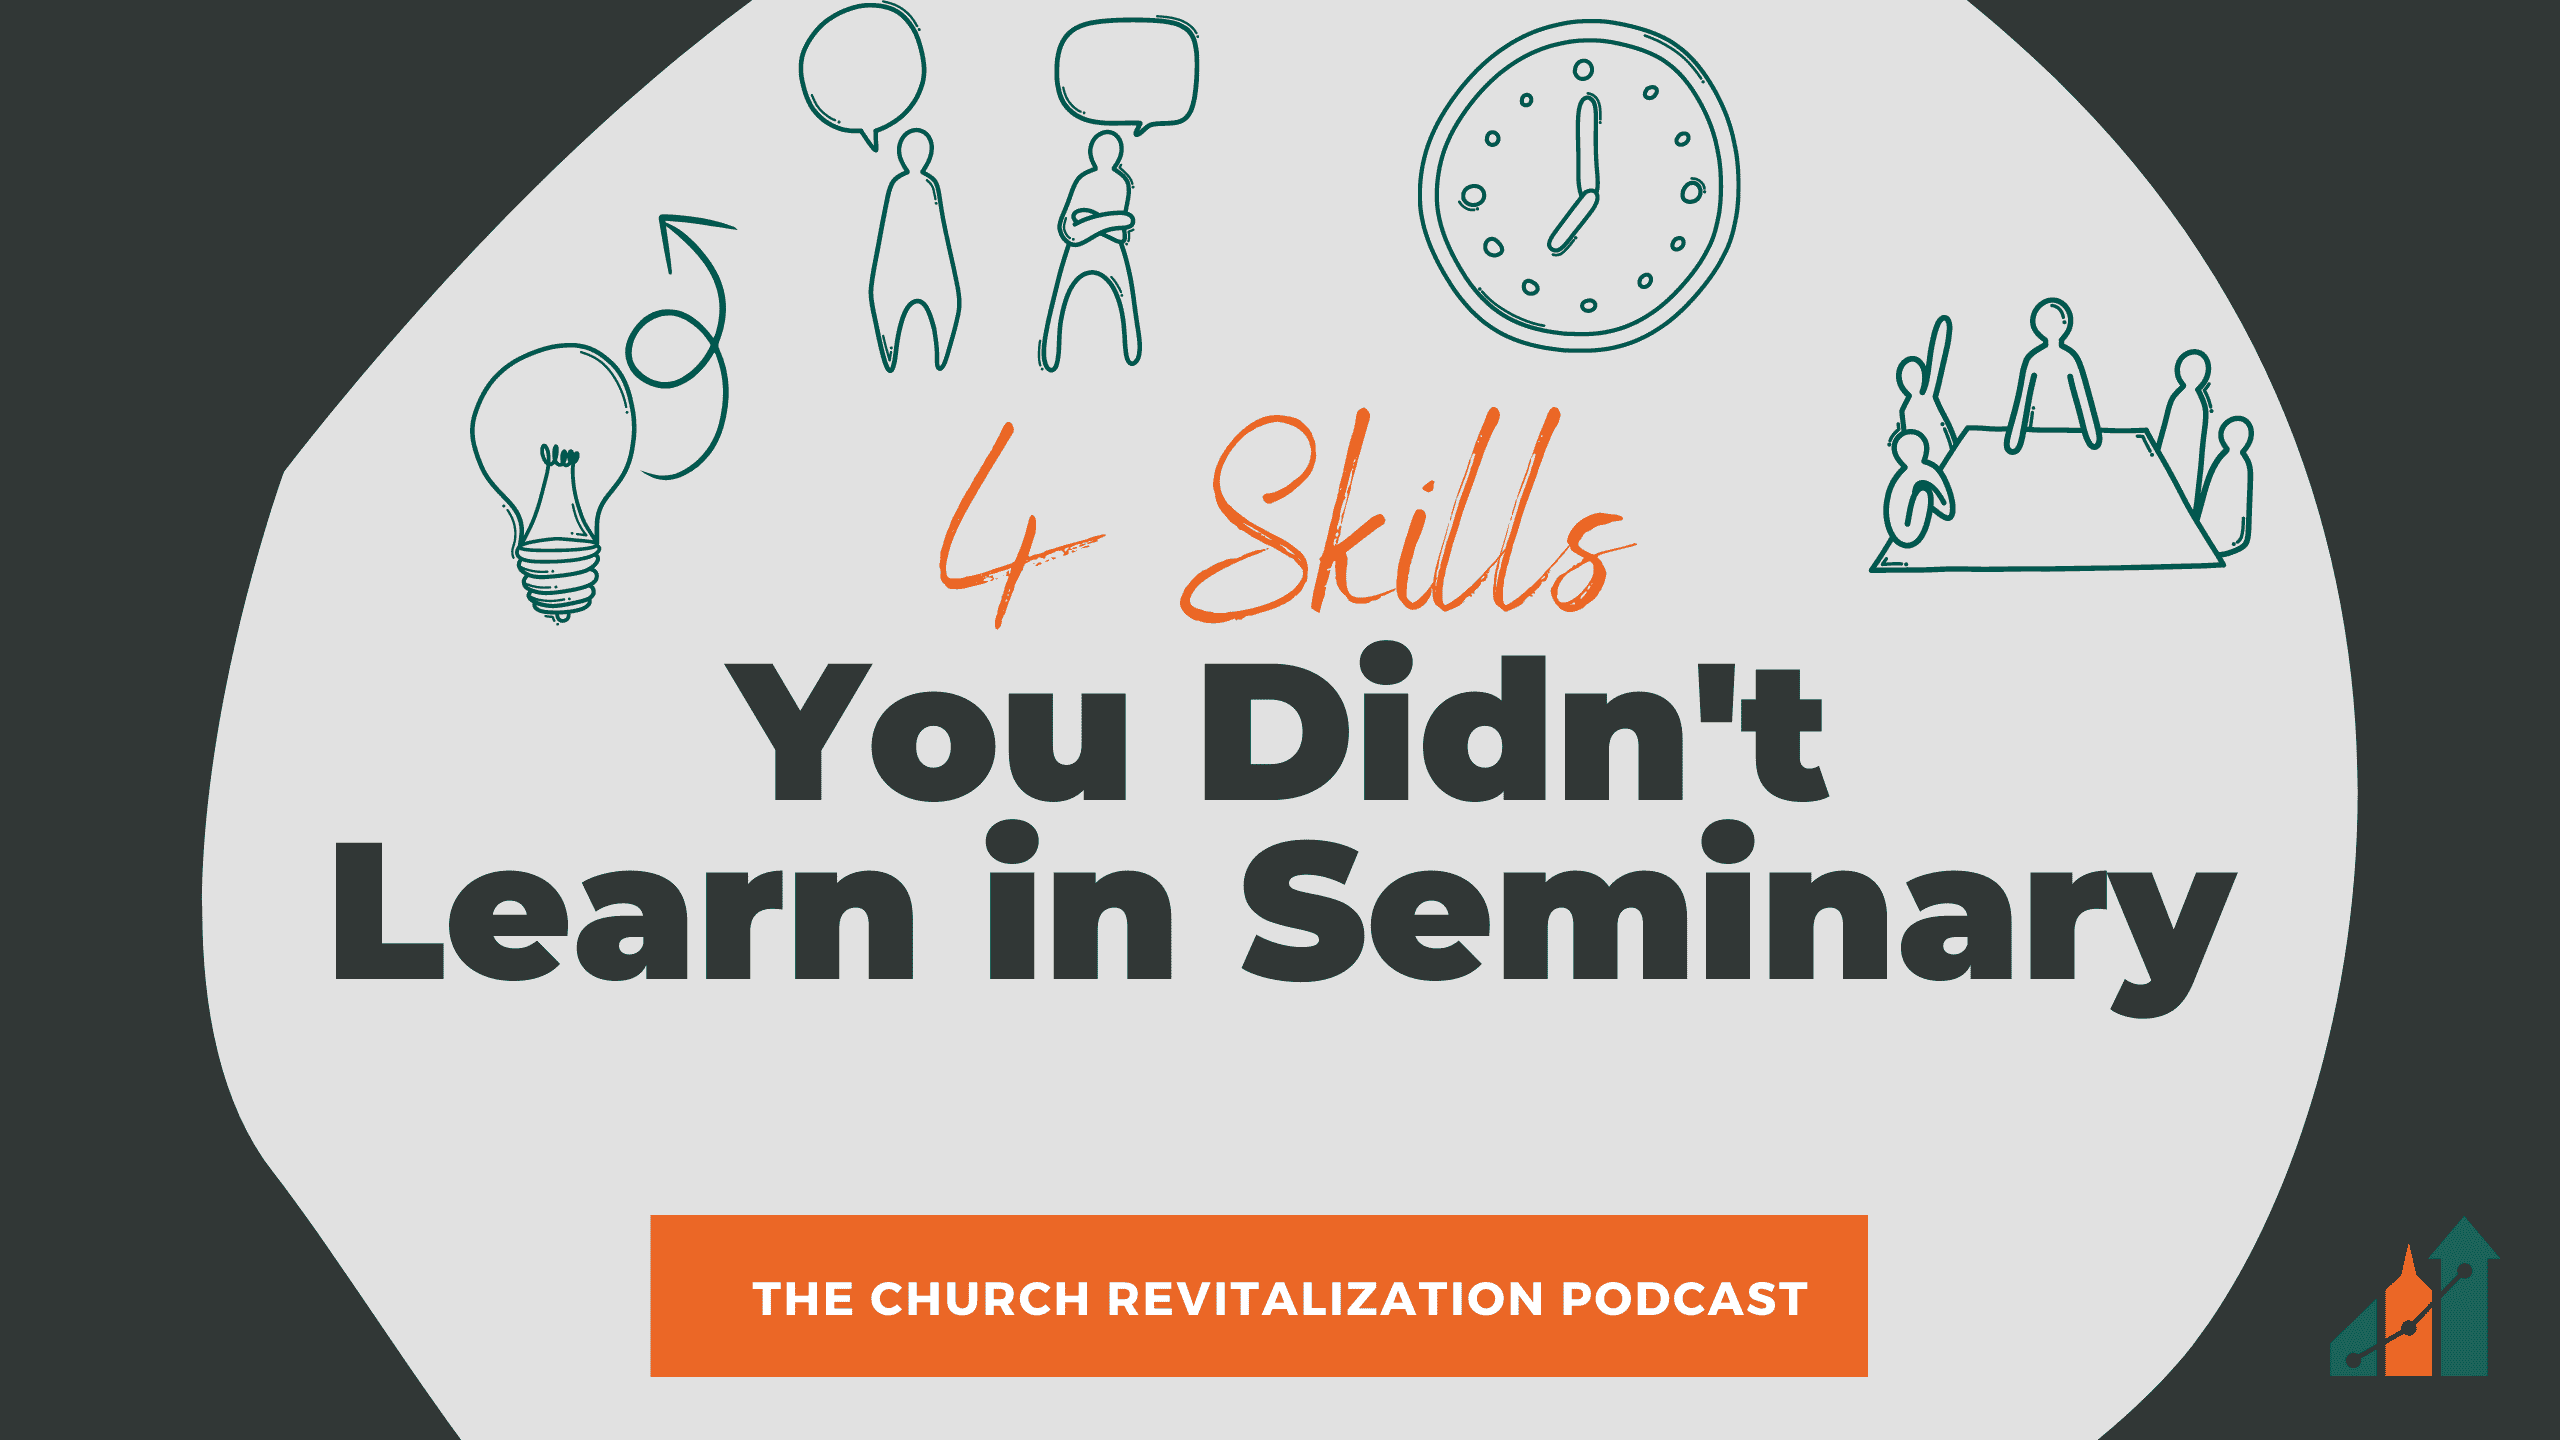 Four Skills You Didn’t Learn in Seminary